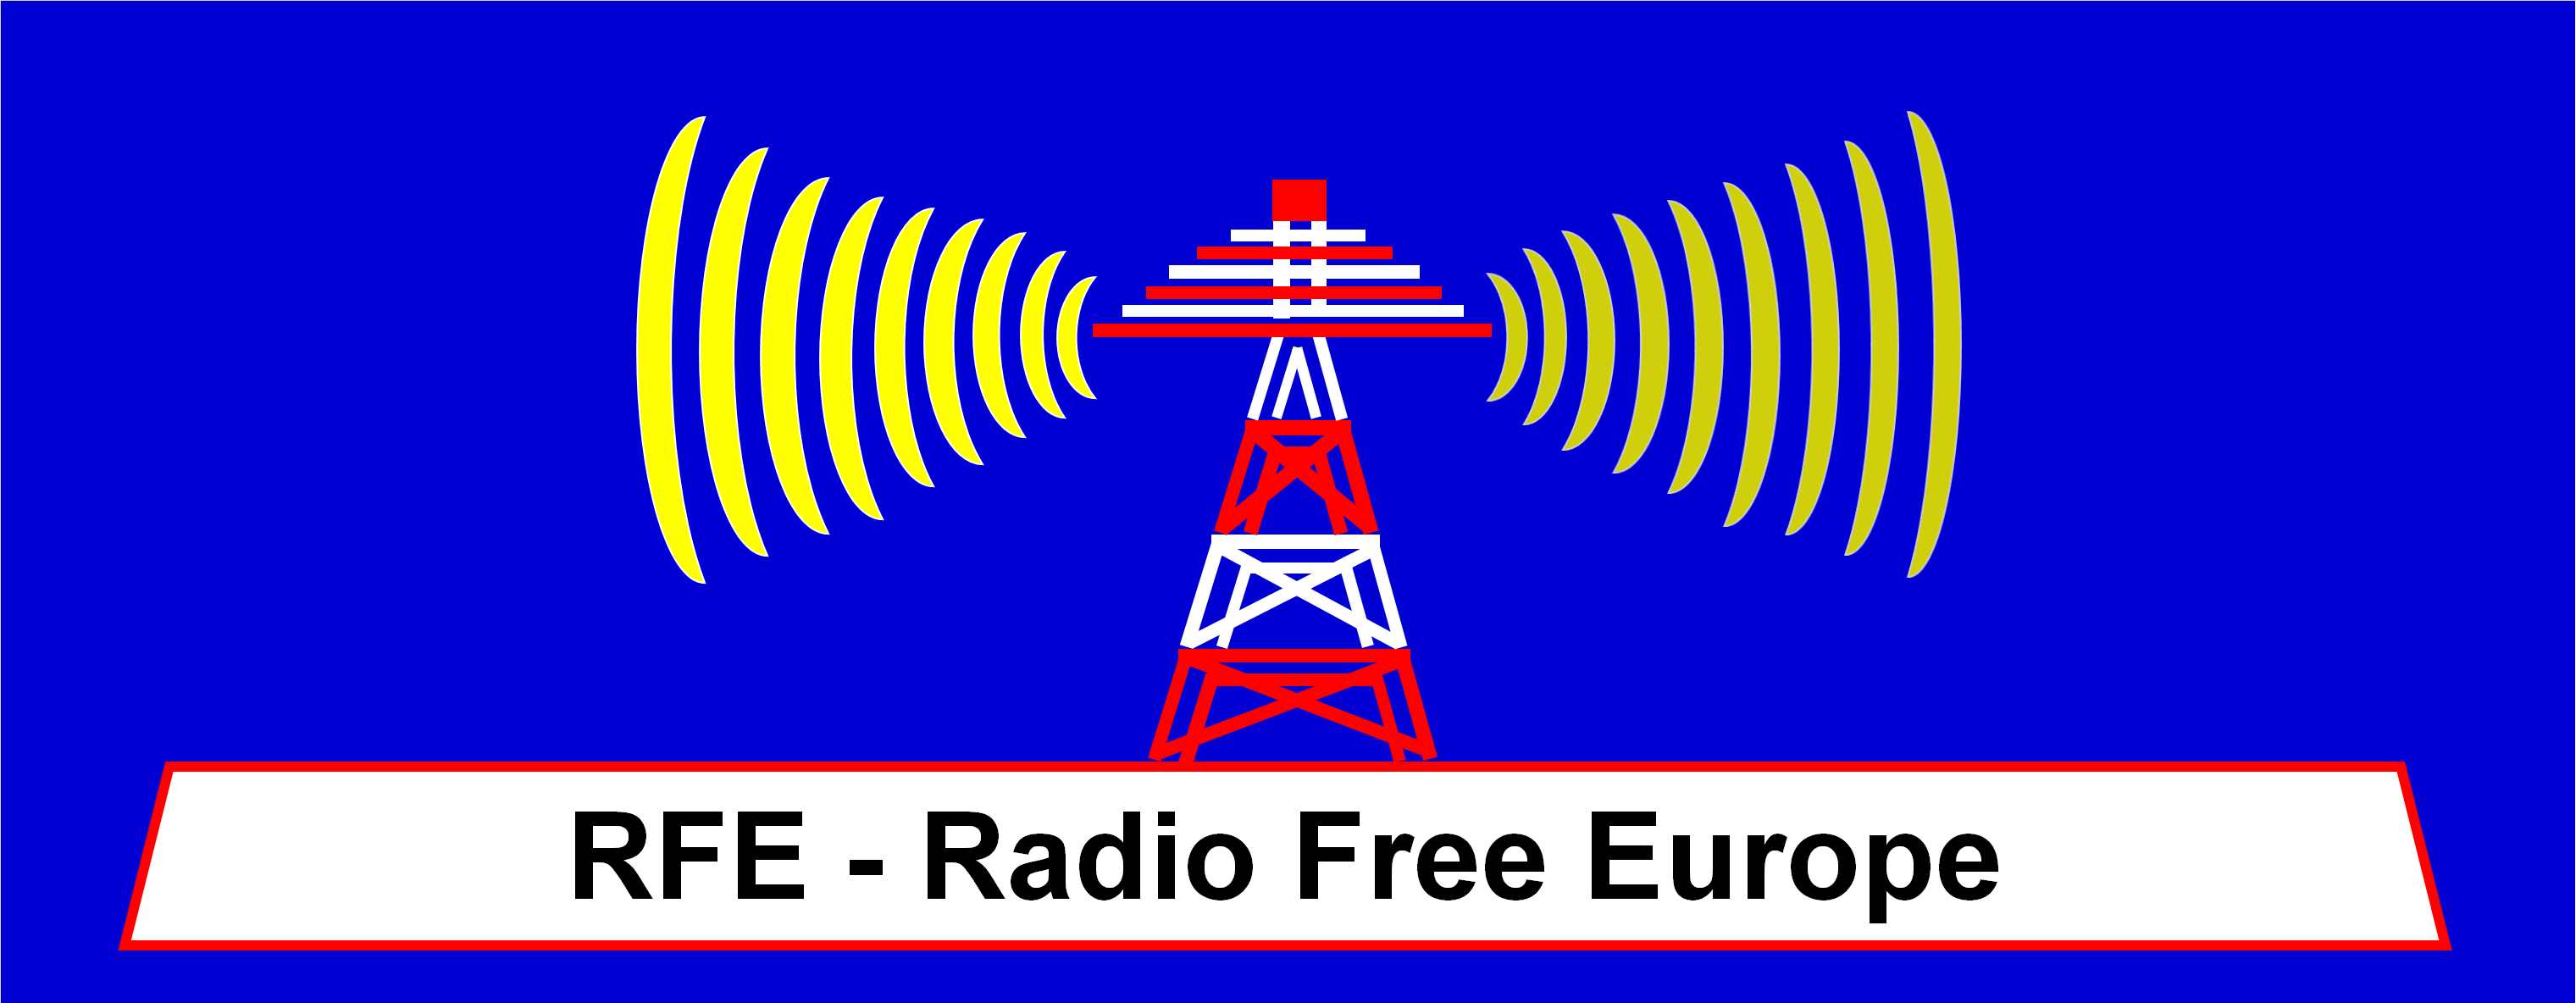 RFE - Radio Free Europe